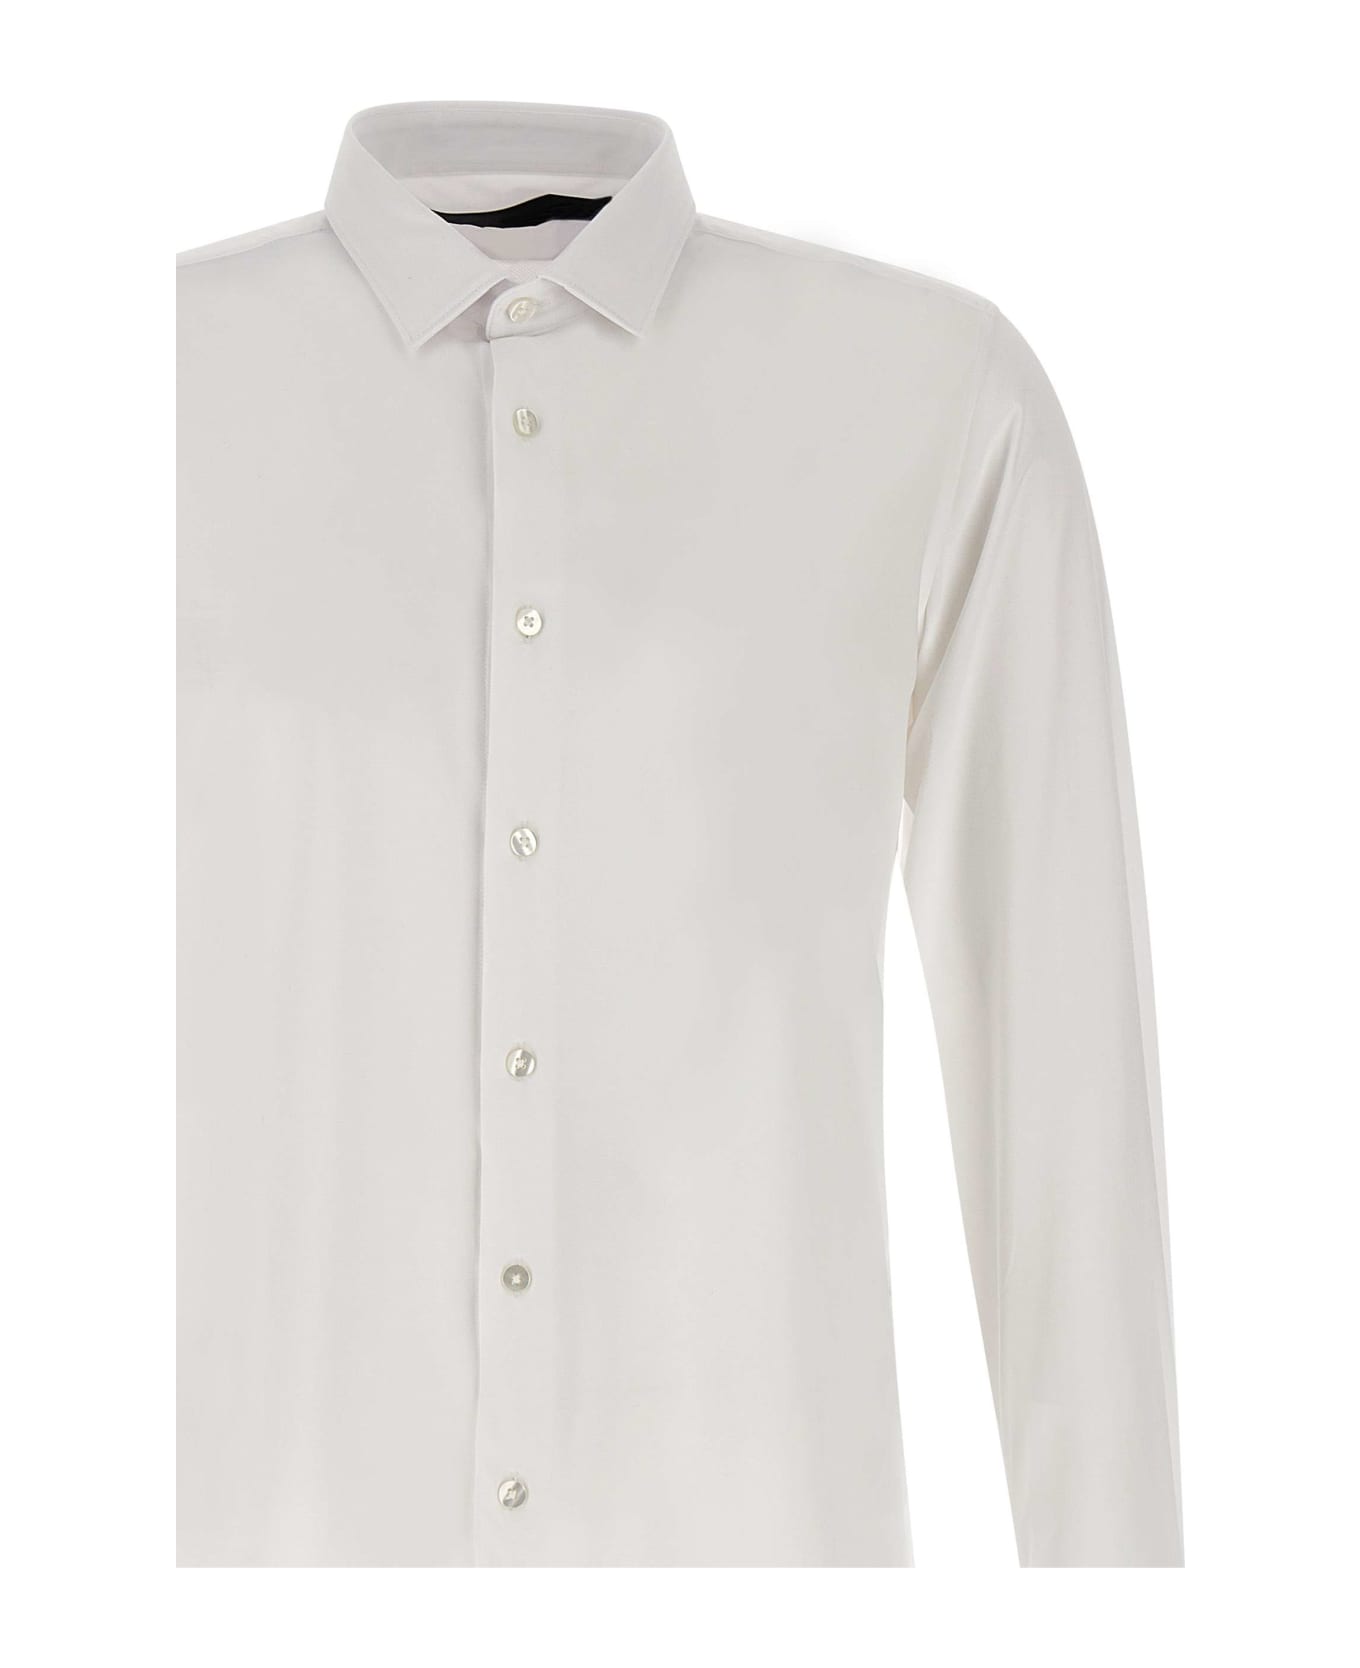 RRD - Roberto Ricci Design 'oxford Open' Shirt - White